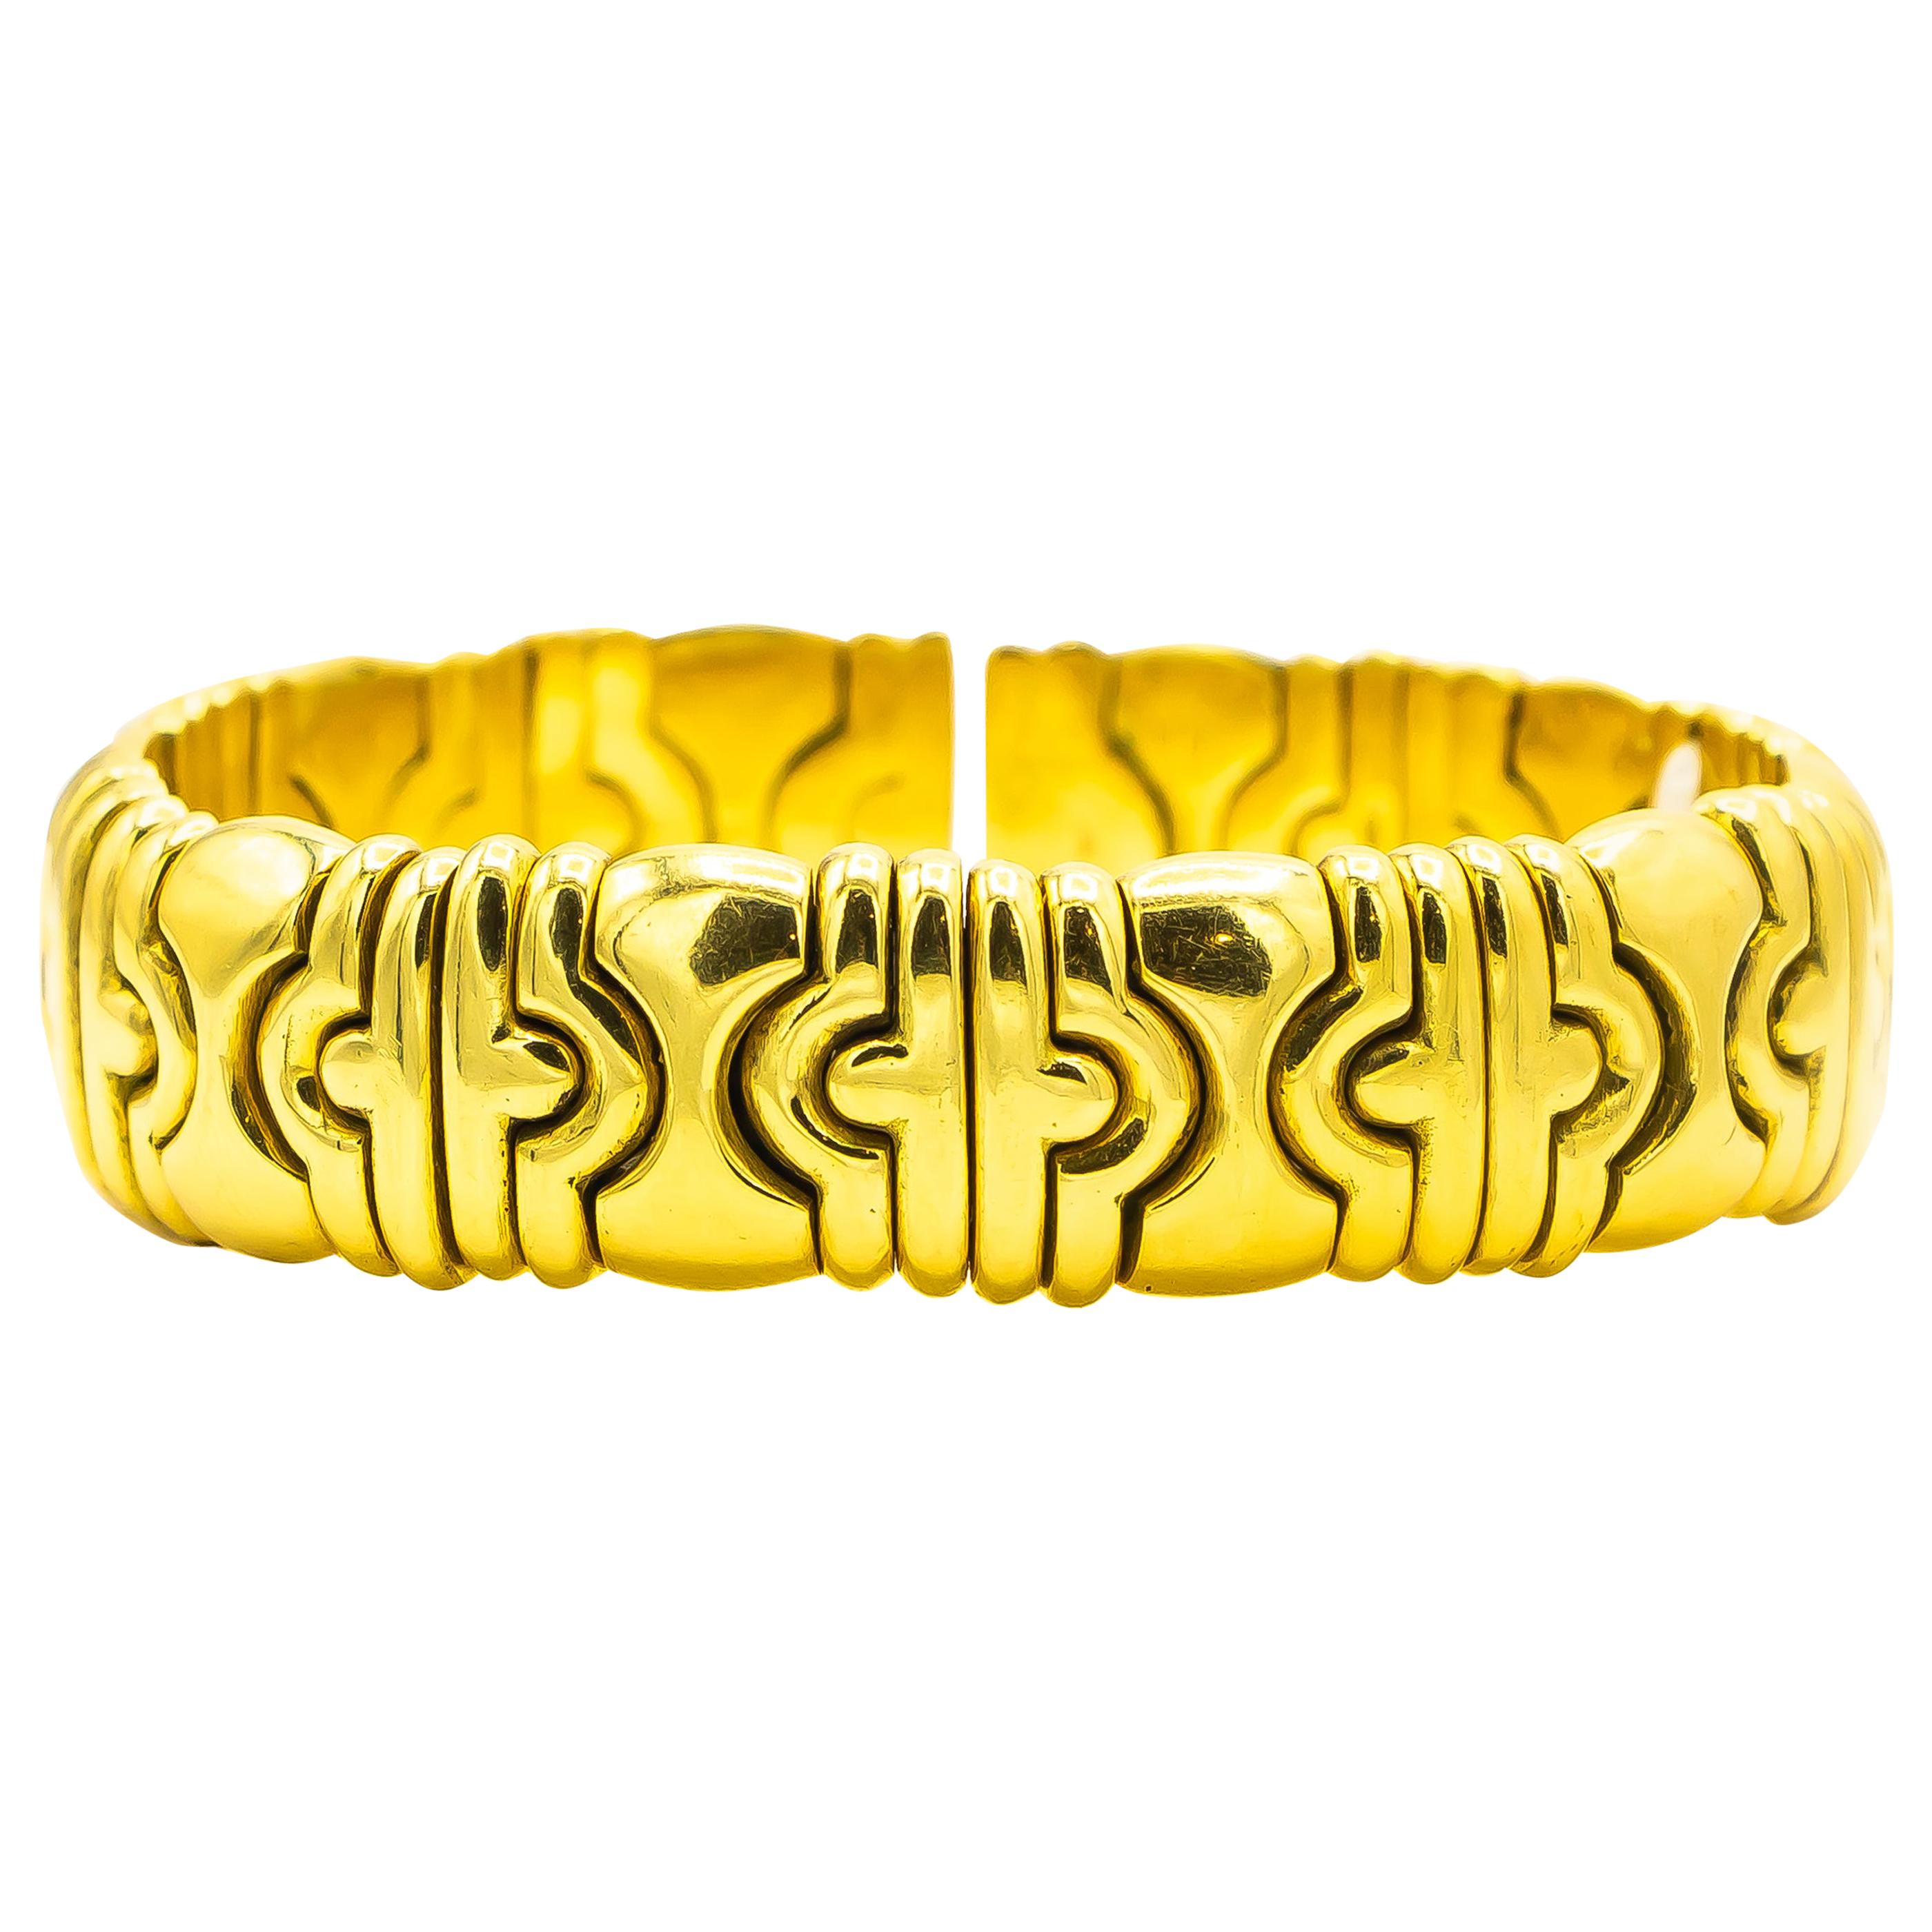 Cuff Bracelet 18 Karat Gold 80 Grams Made in Italy